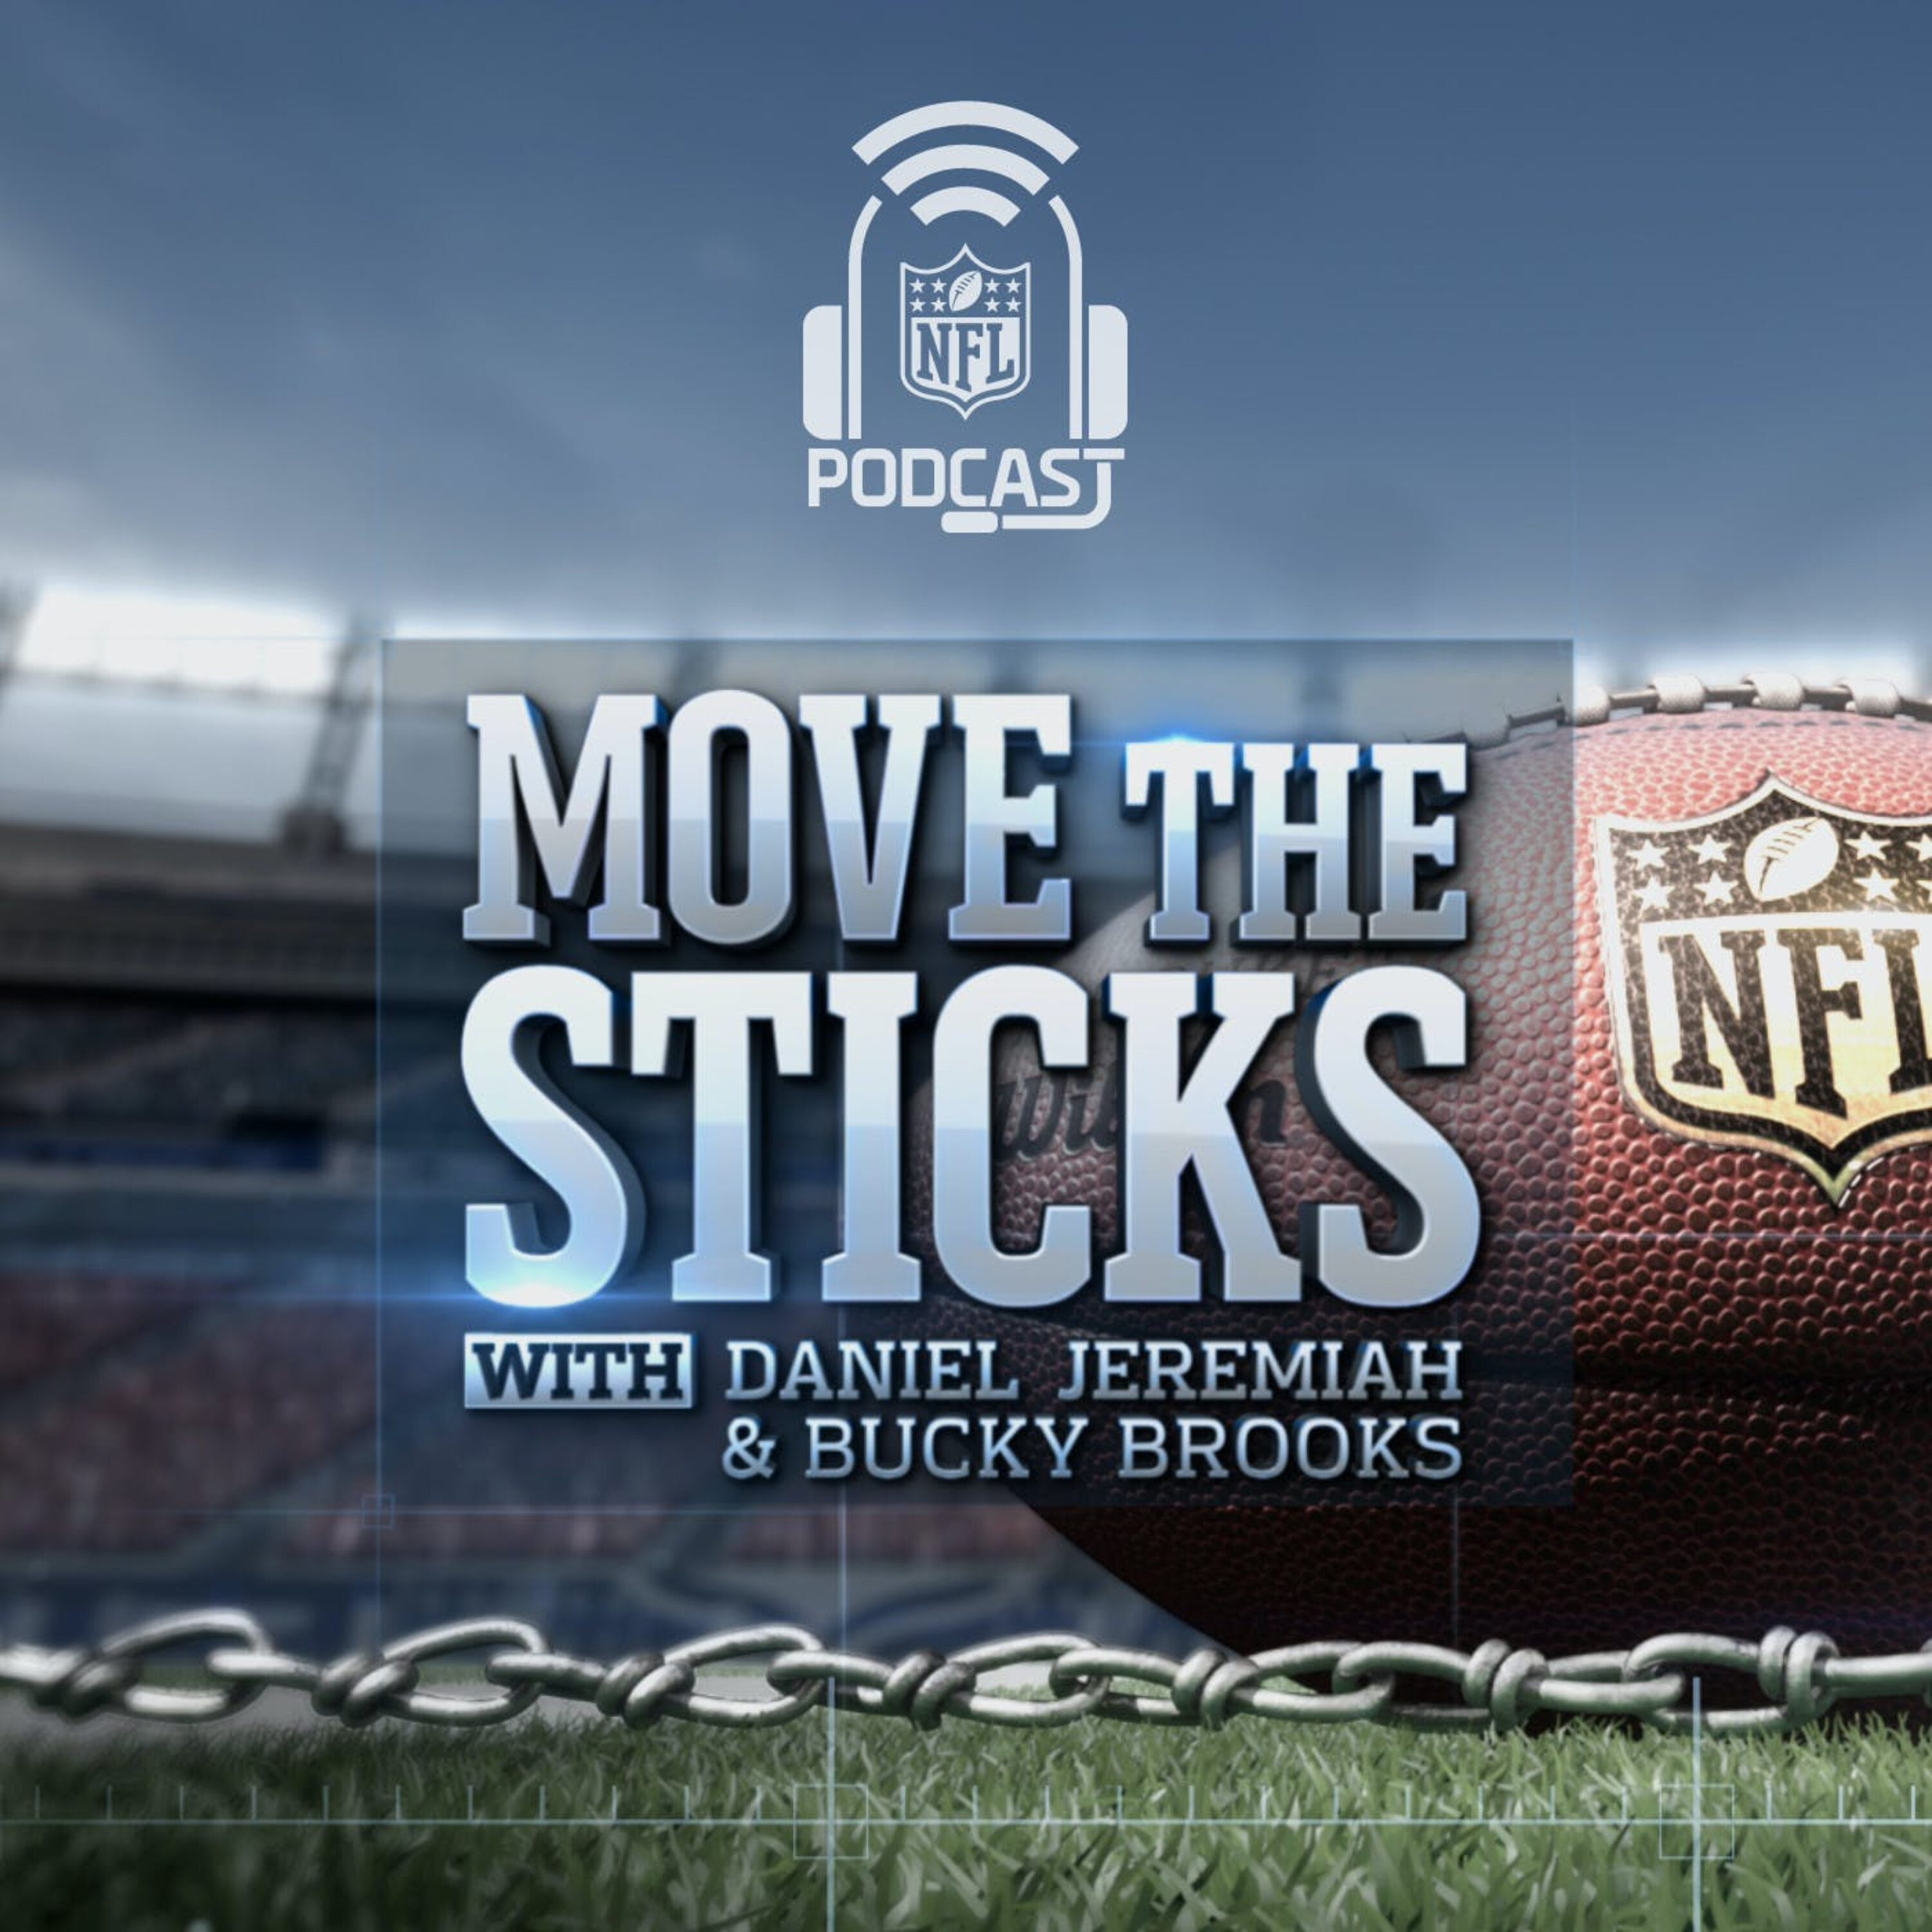 267: Bucky Brooks' Top 5 draft prospects by position